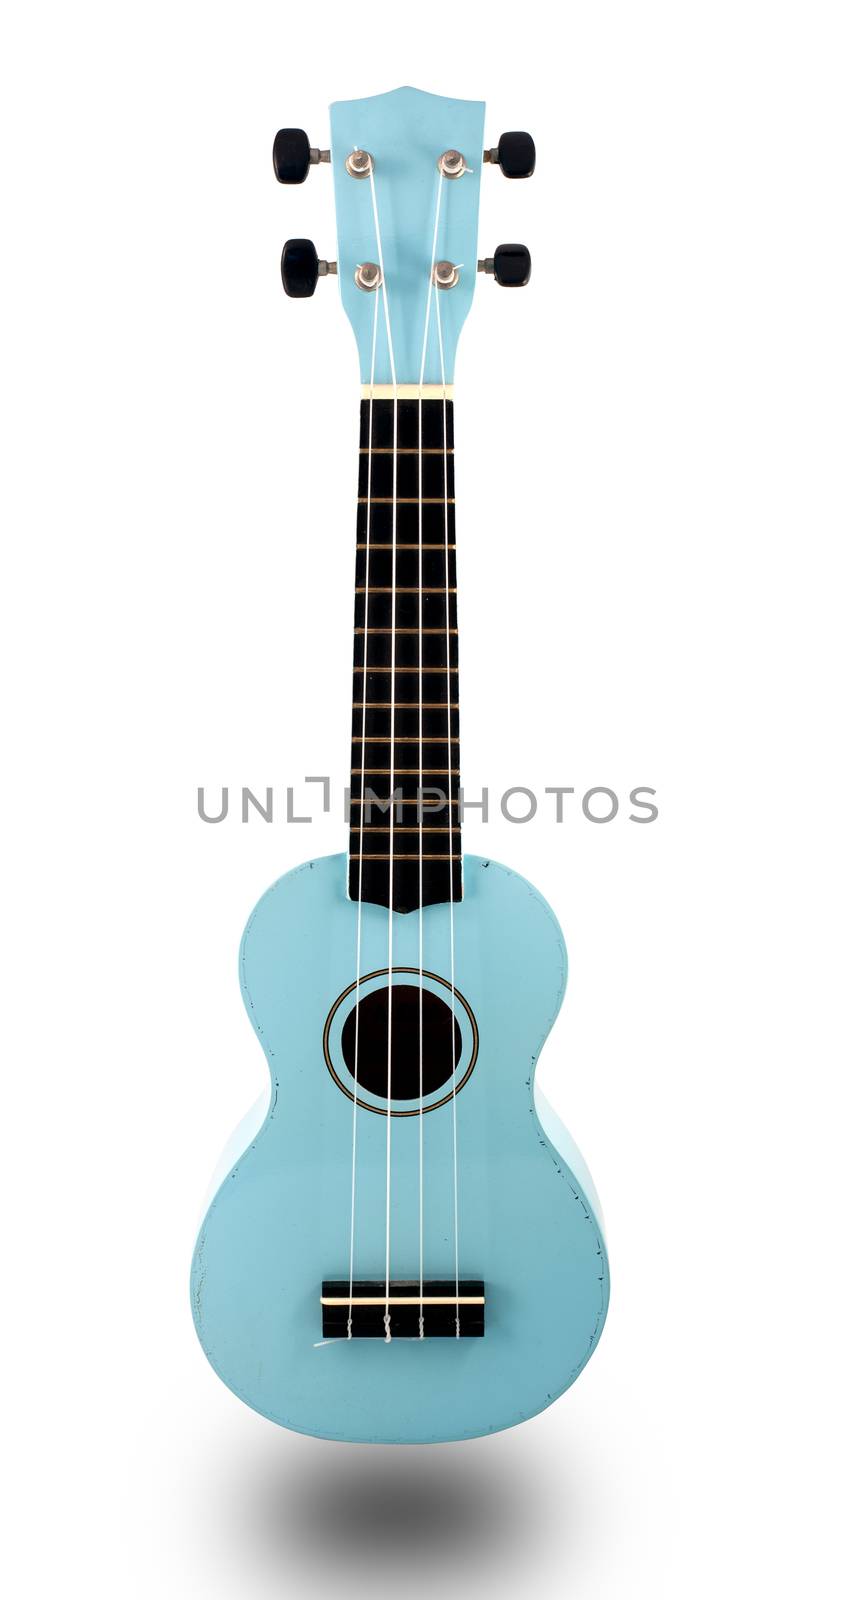 Ukulele guitar by Sorapop